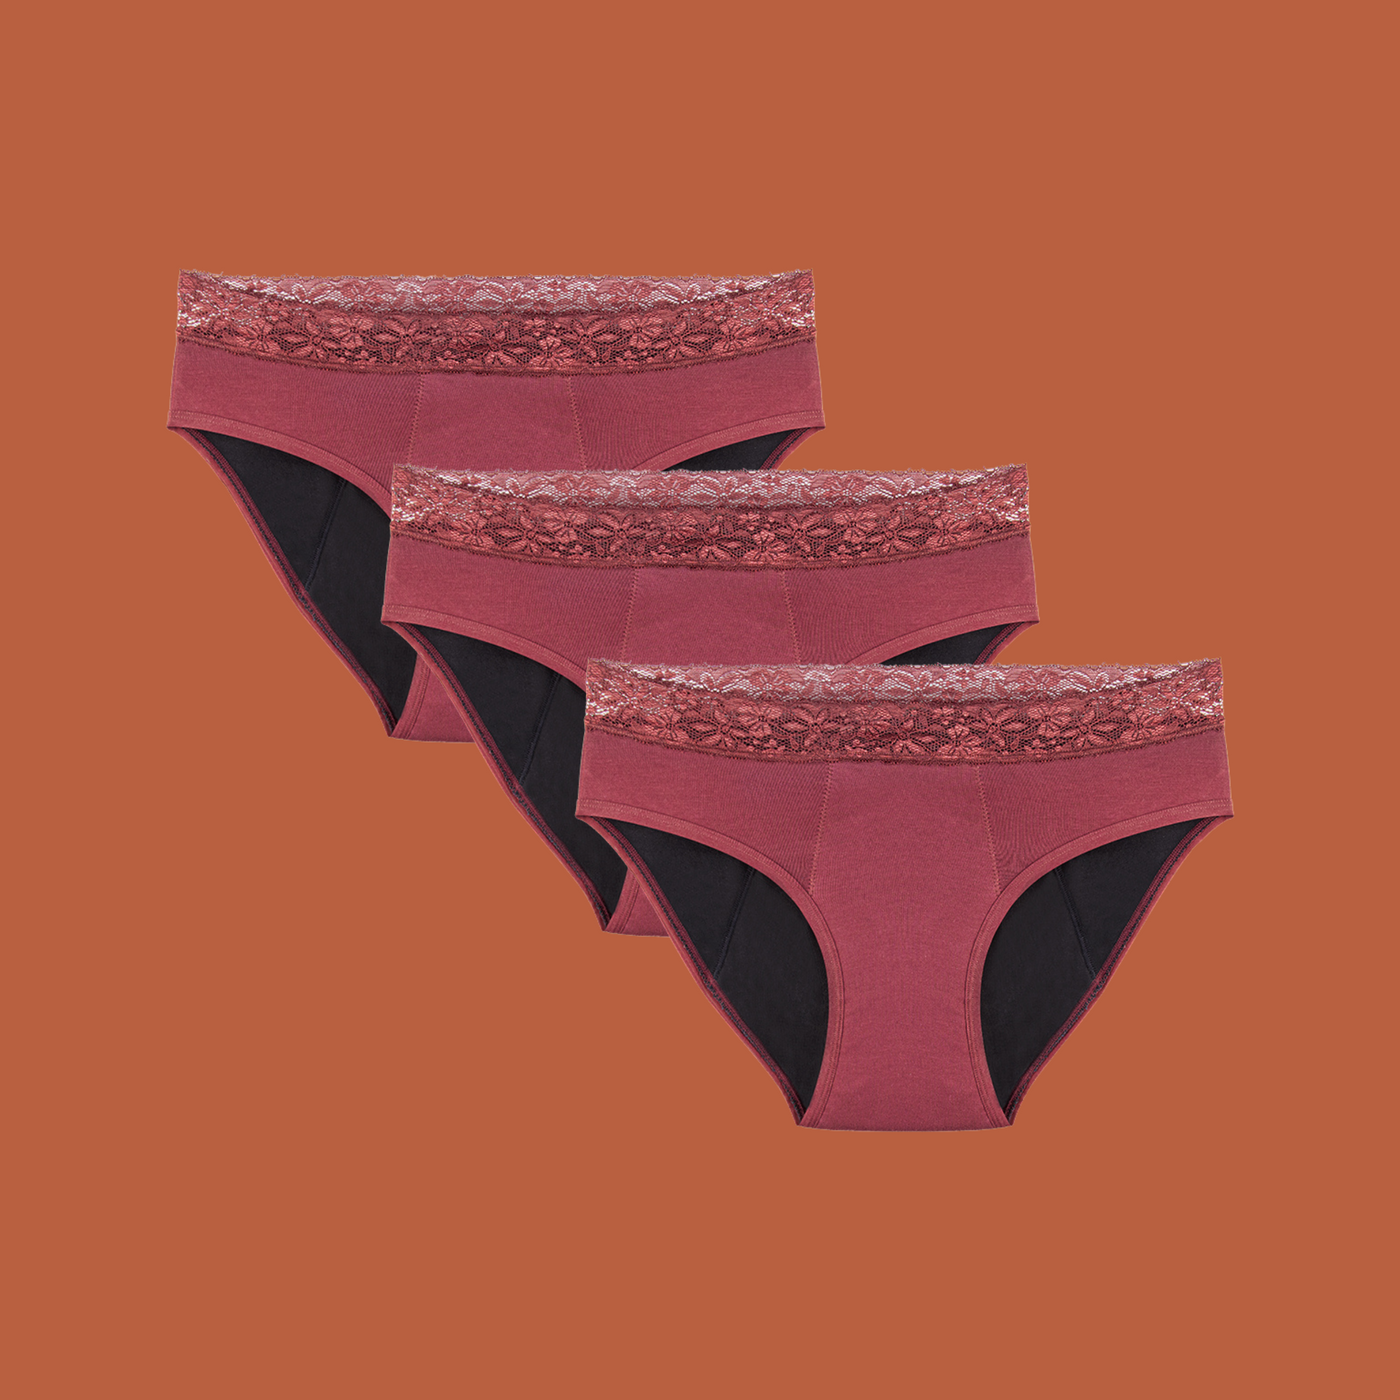 Hiphugger – Period-Proof Underwear